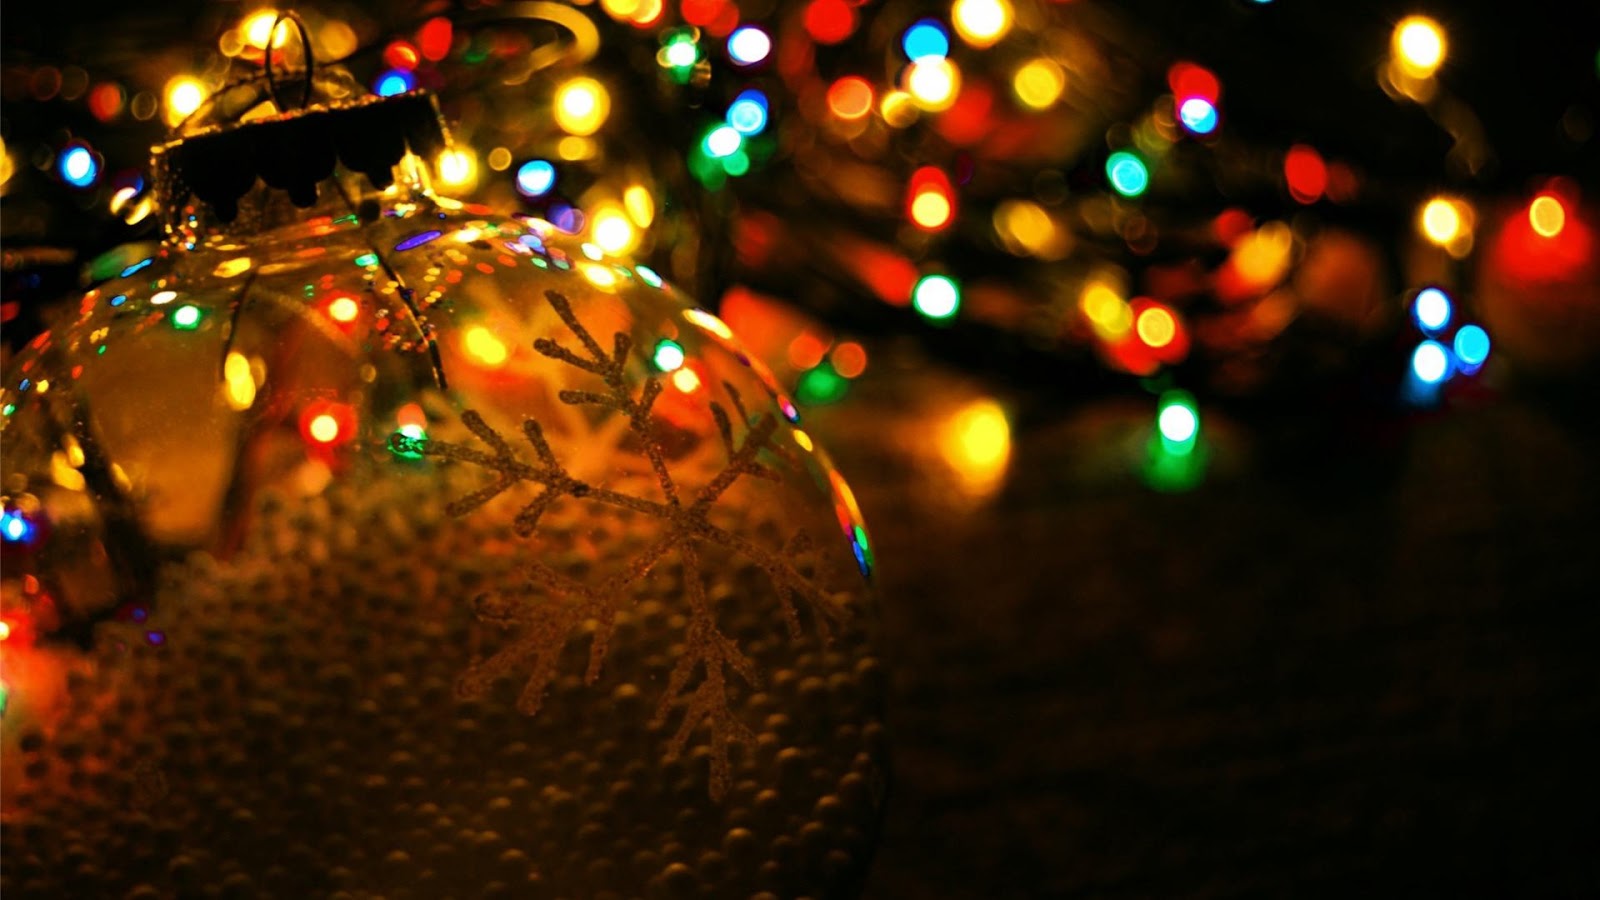 Christmas-Lights-Background-Wallpaper-1920×1080 | wallpapers55.com ...